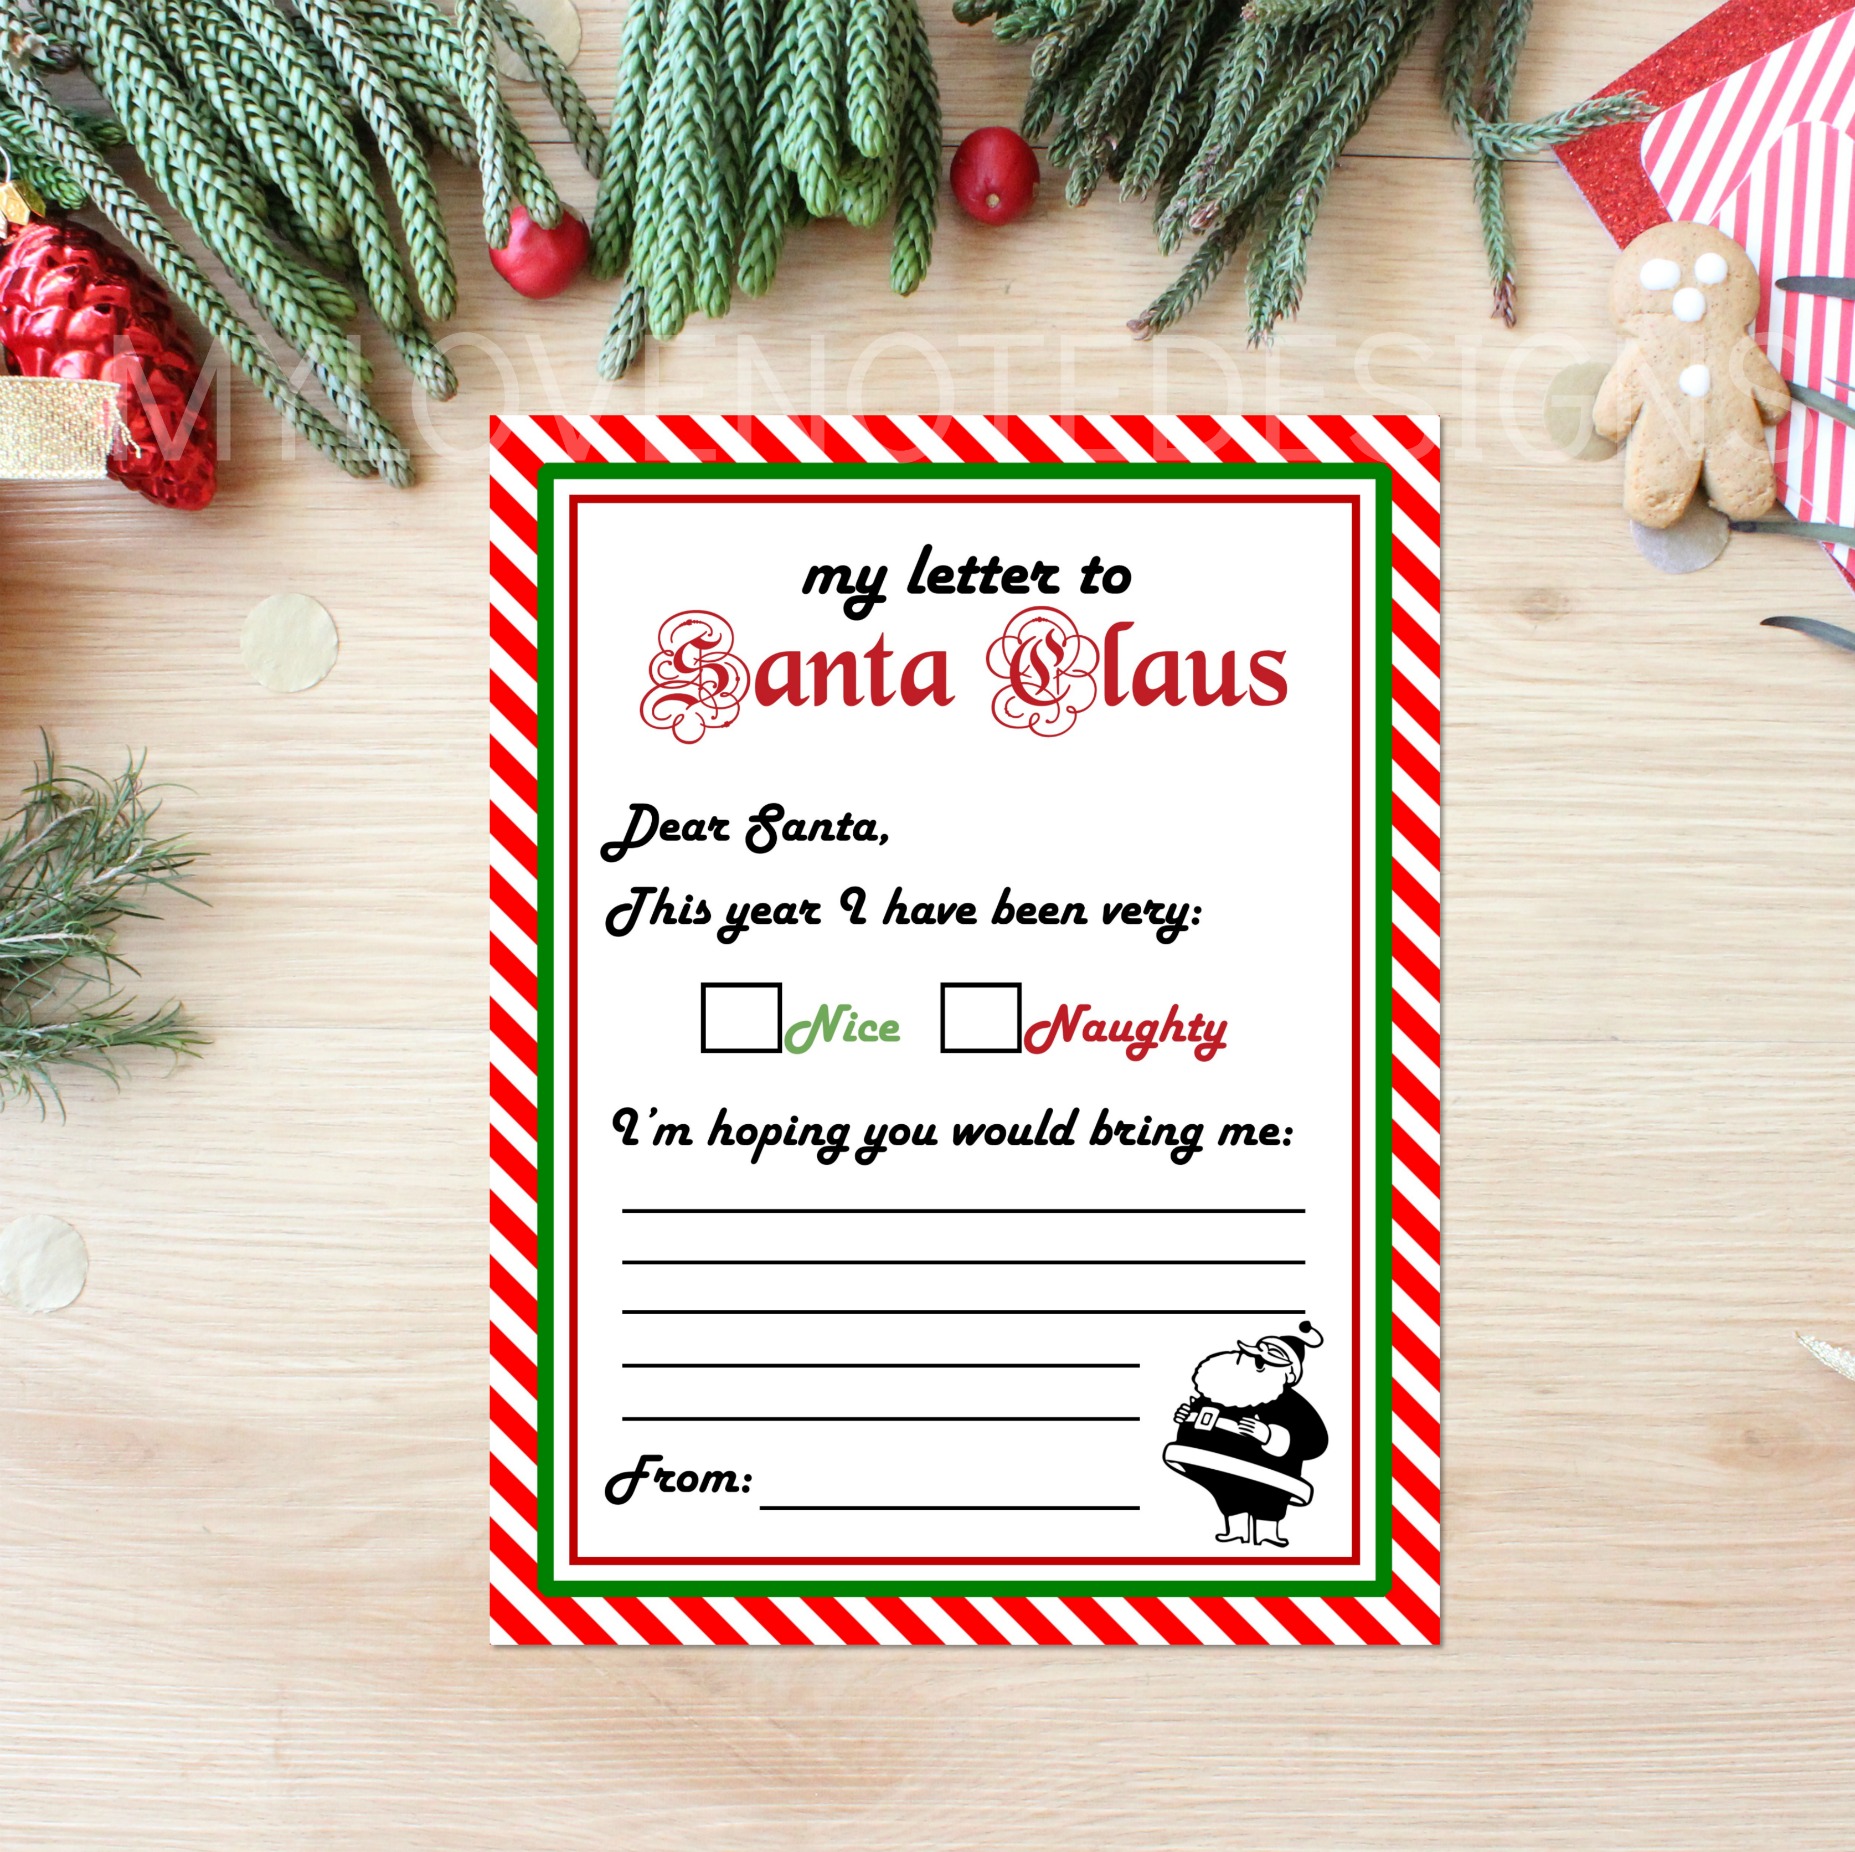 Free Printable Letter to Santa Claus